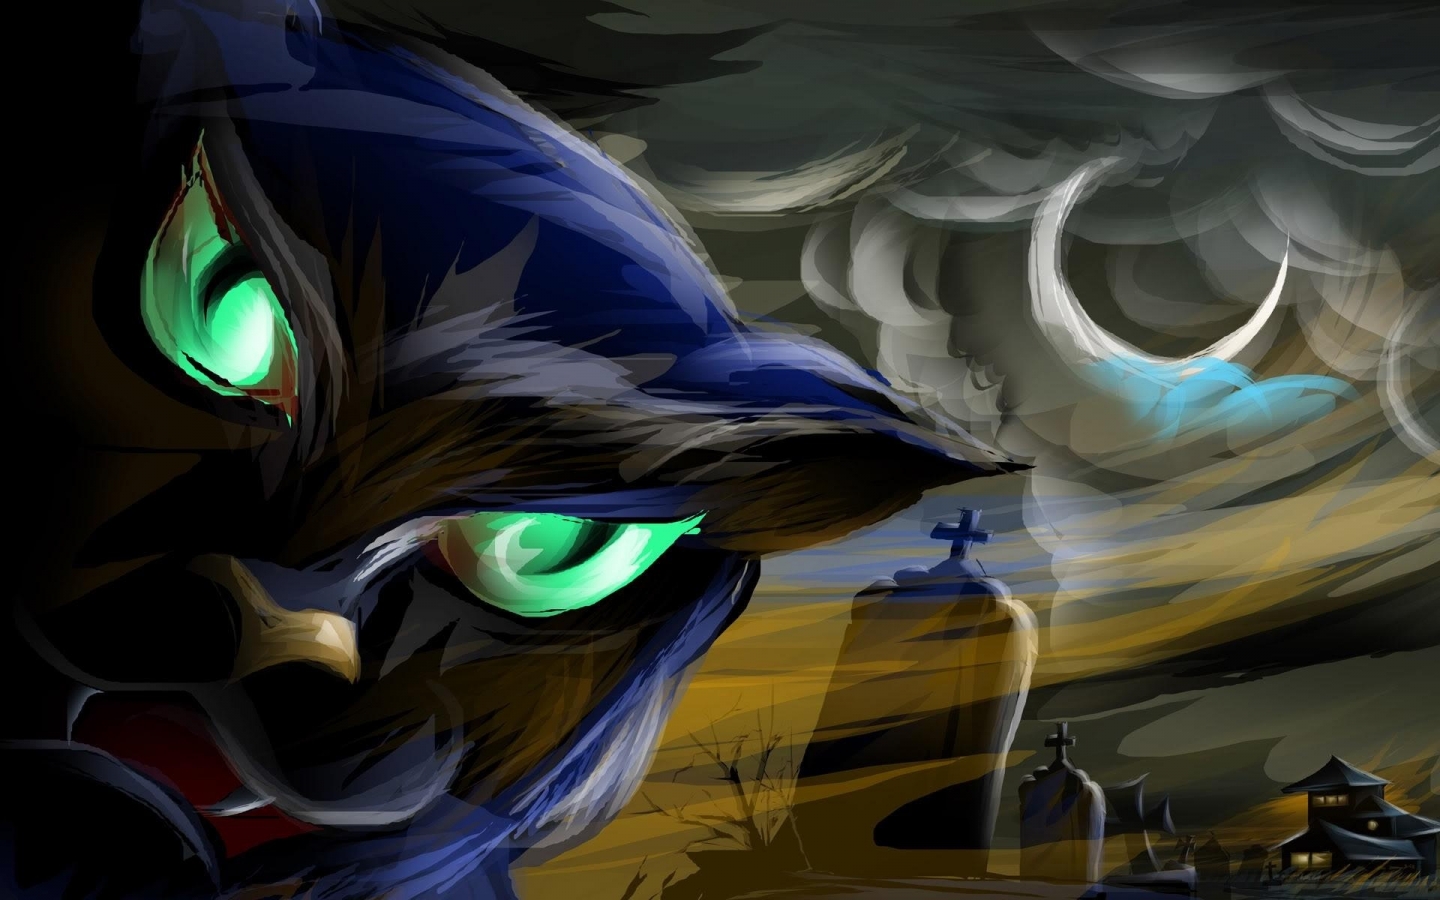 Halloween Black Cat Illustration for 1440 x 900 widescreen resolution